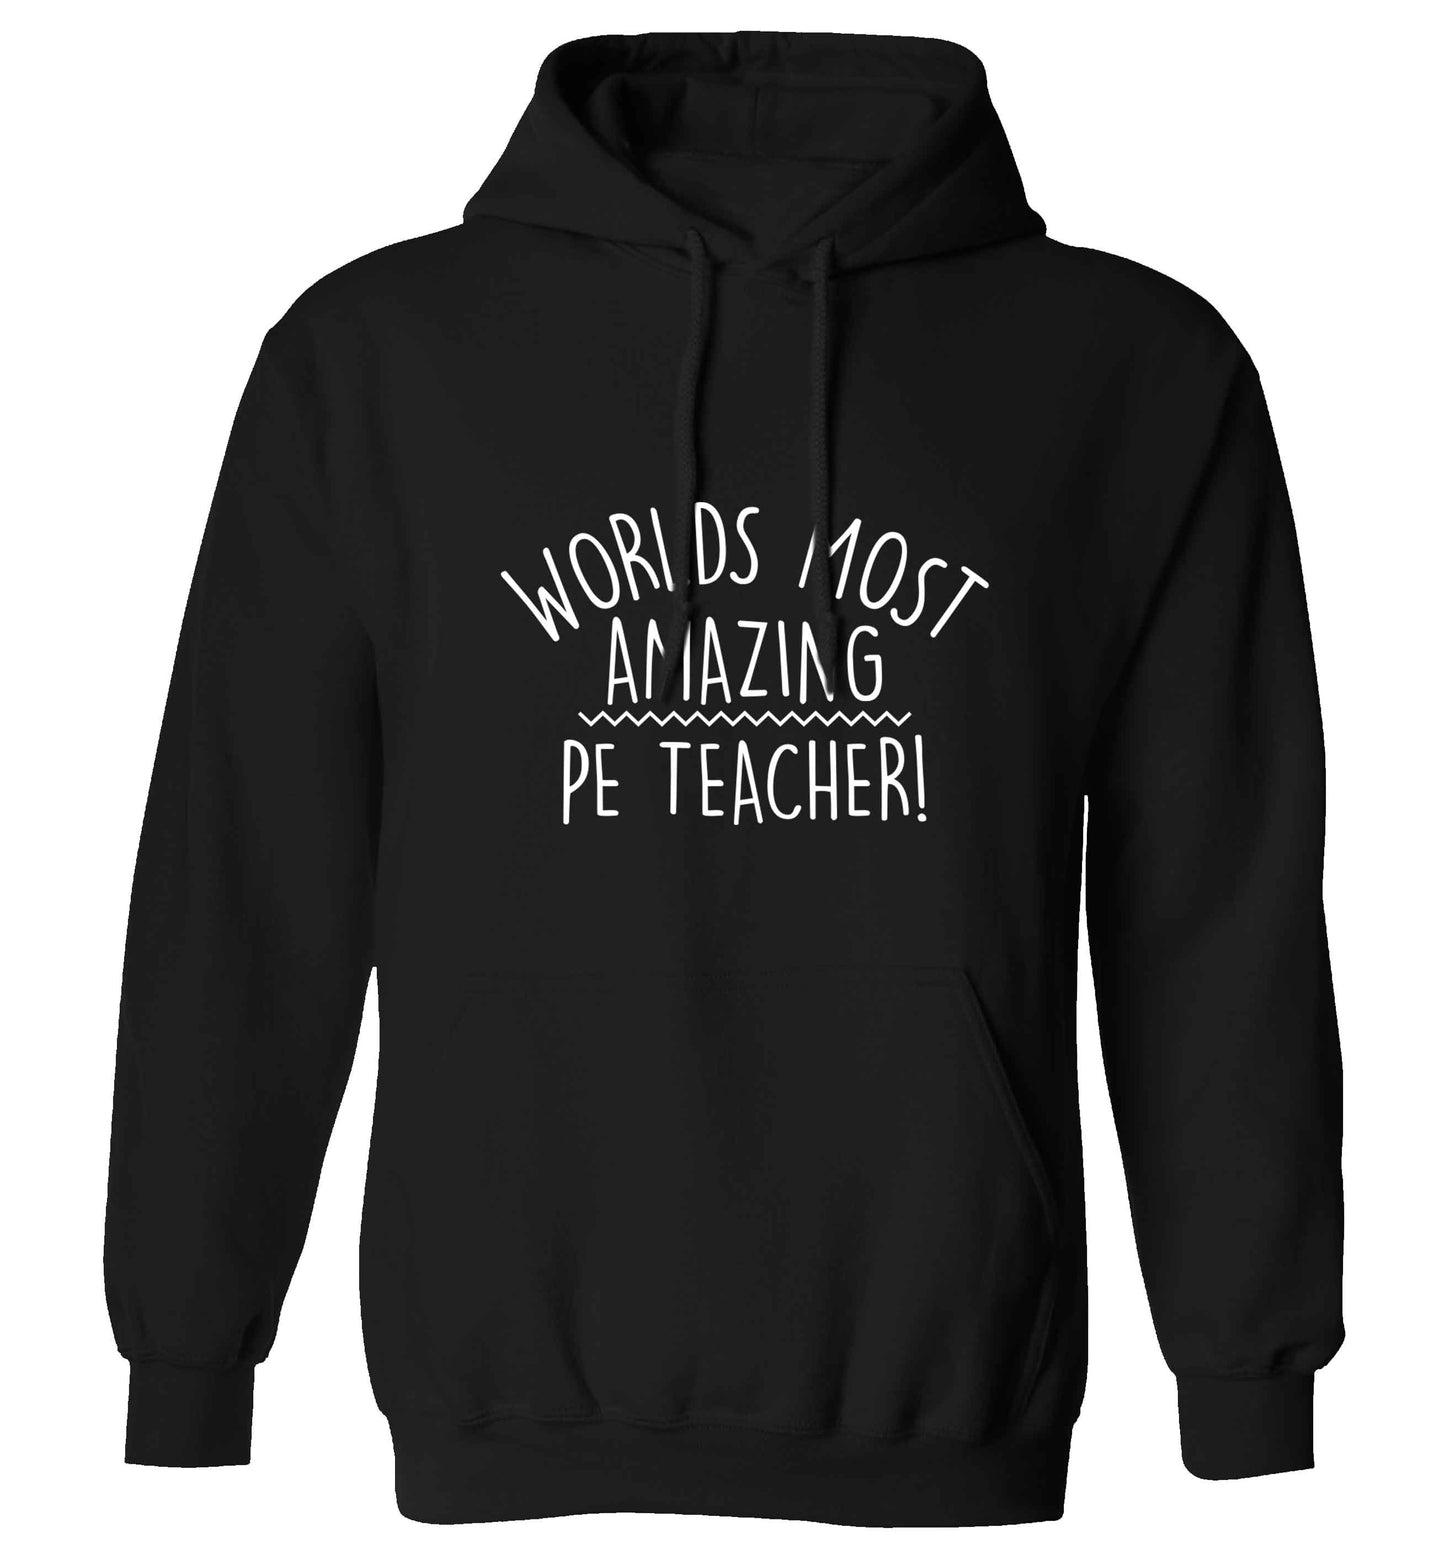 Worlds most amazing PE teacher adults unisex black hoodie 2XL